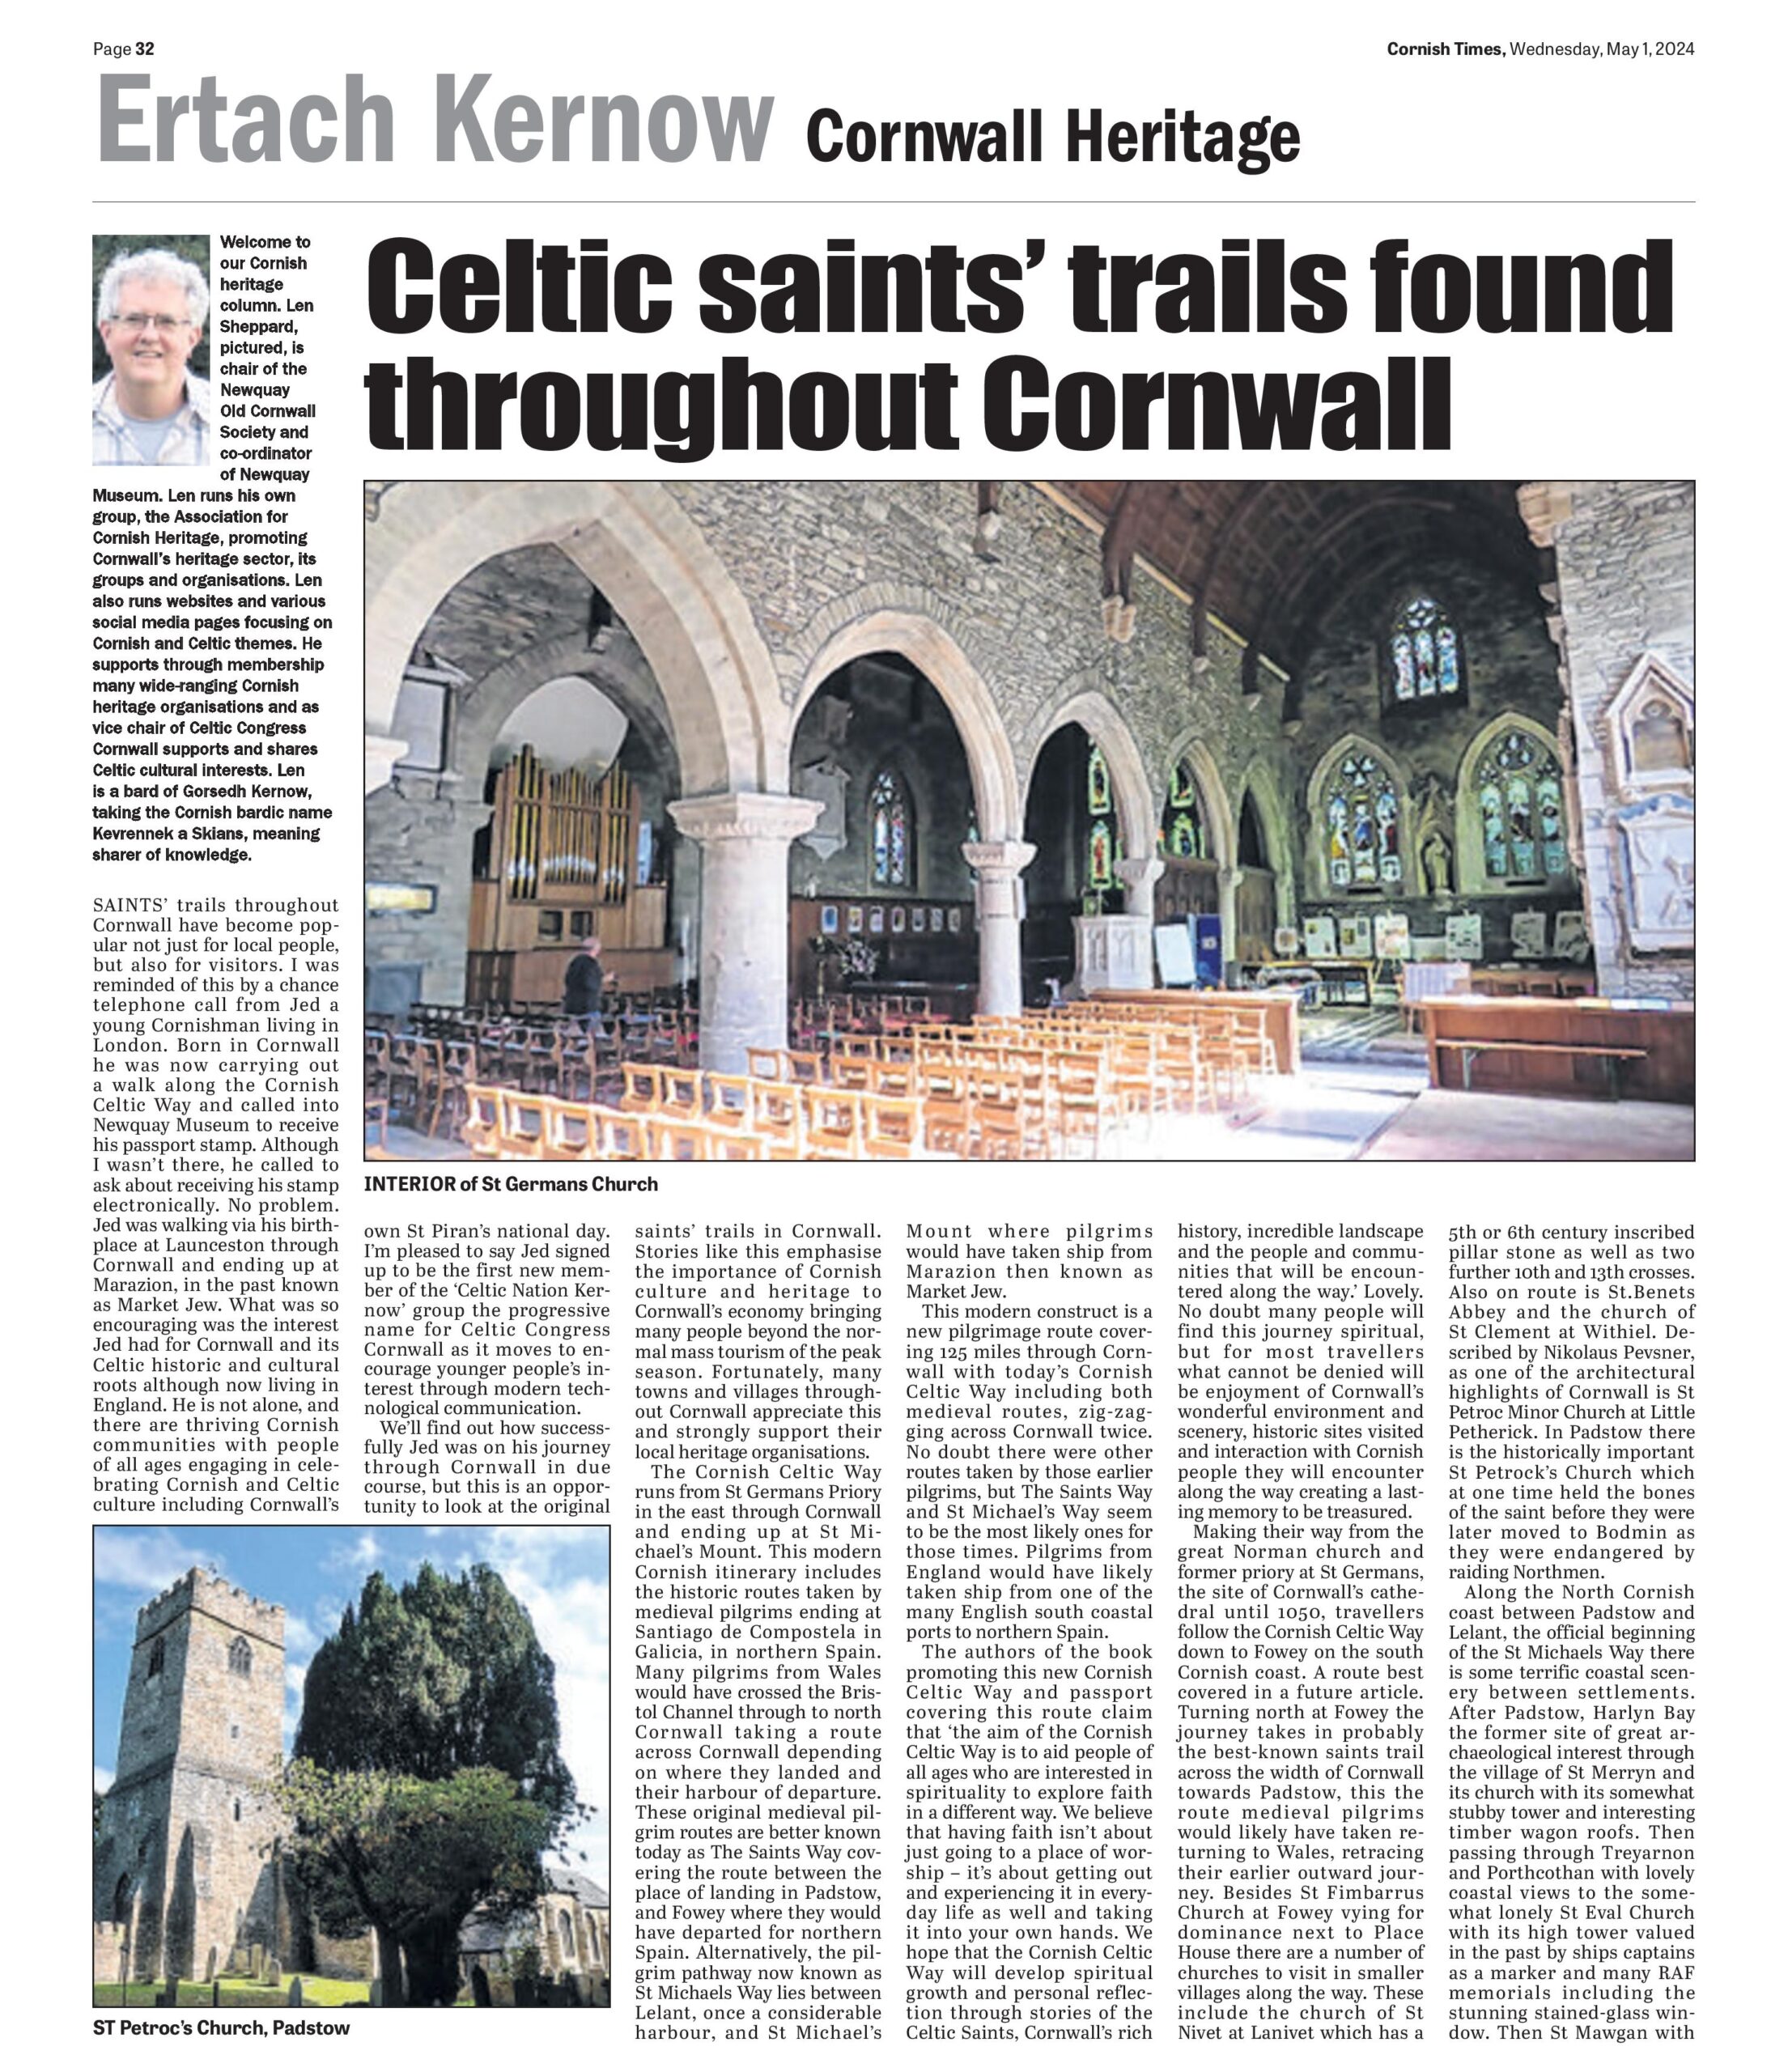 Cornish Celtic Way: Saints’ trails through Cornwall